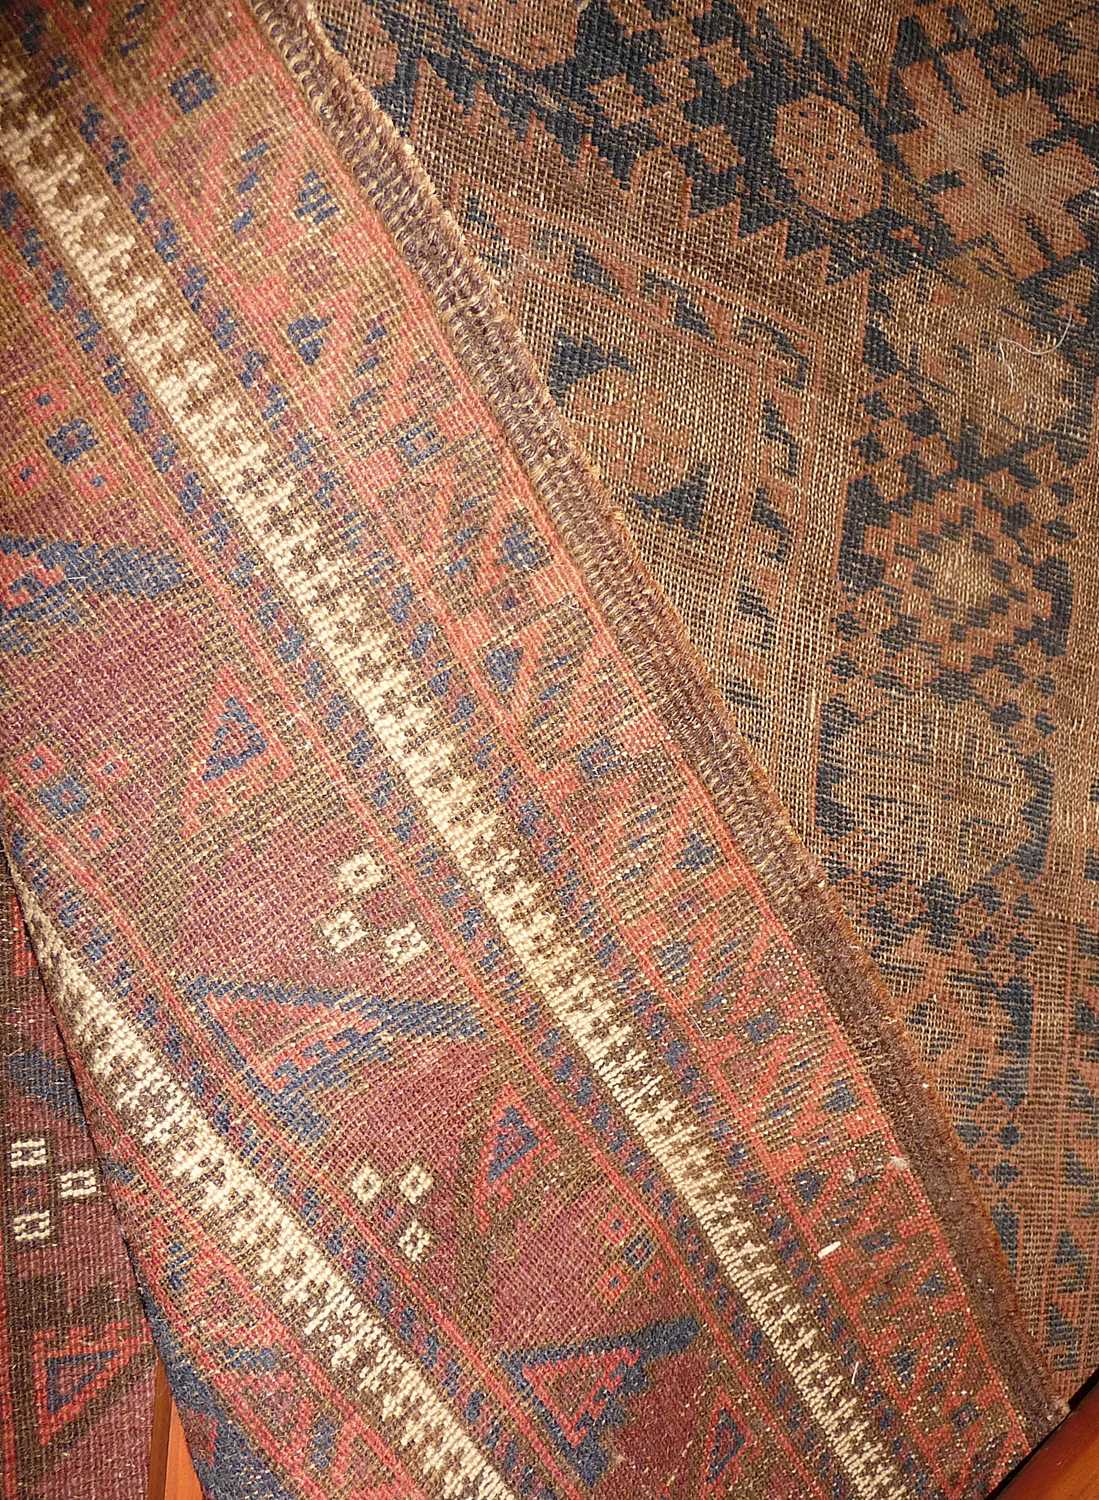 Persian rug 219cm x 112cm - Image 2 of 2